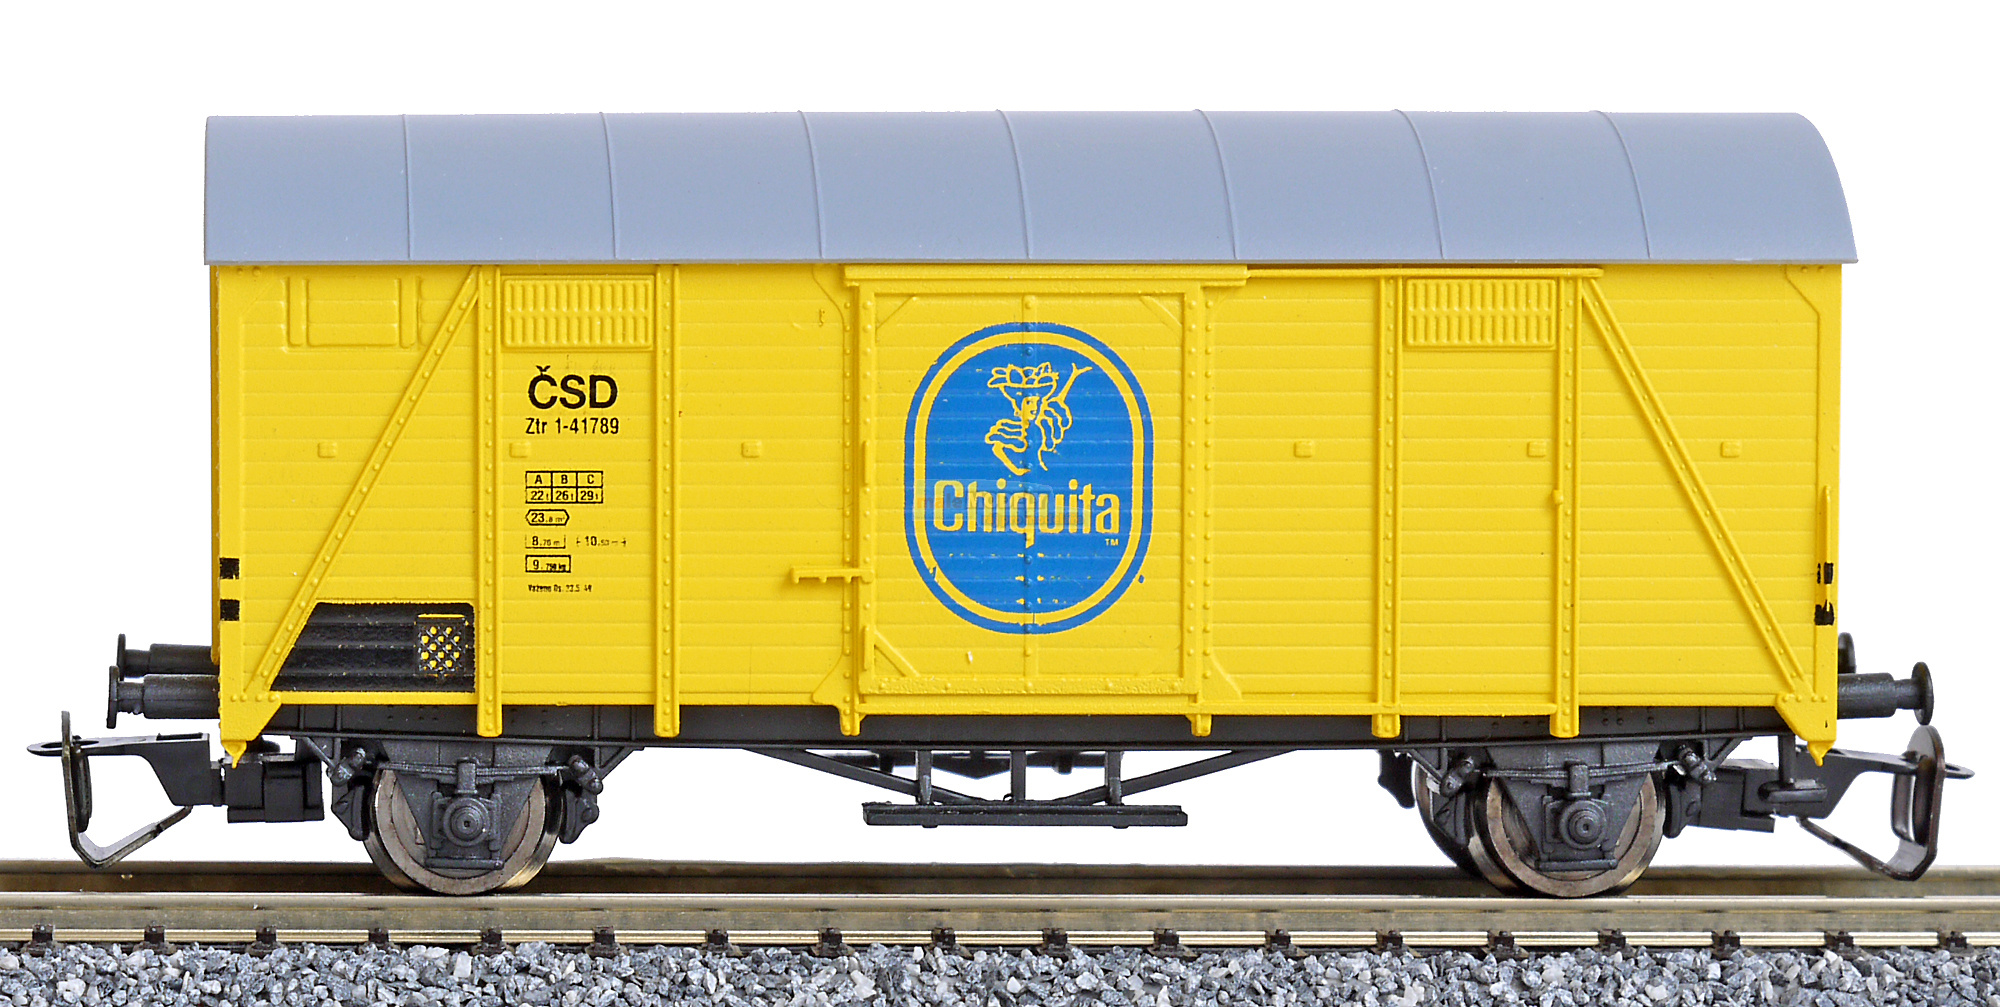 Krytý nákldní vůz řady Ztr - Chiquita